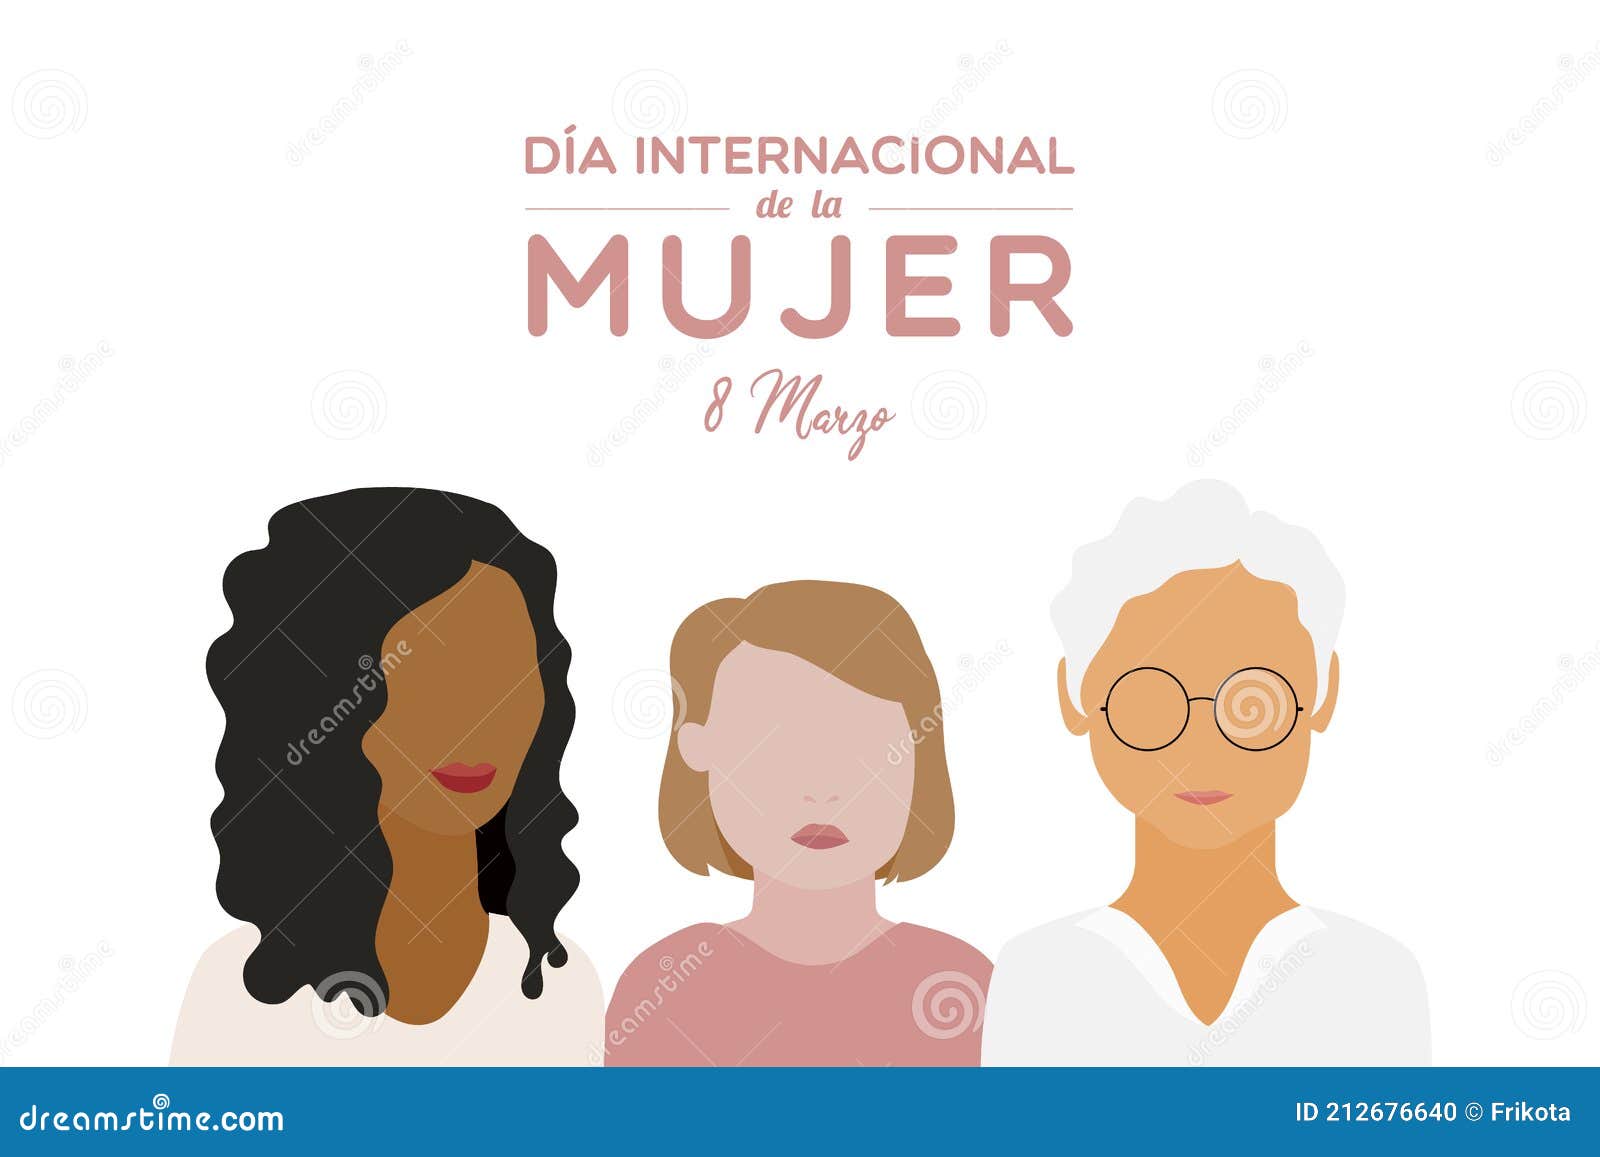 international women`s day. 8 march. spanish. dia internacional de la mujer. 8 marzo. three women together. multiracial. women of